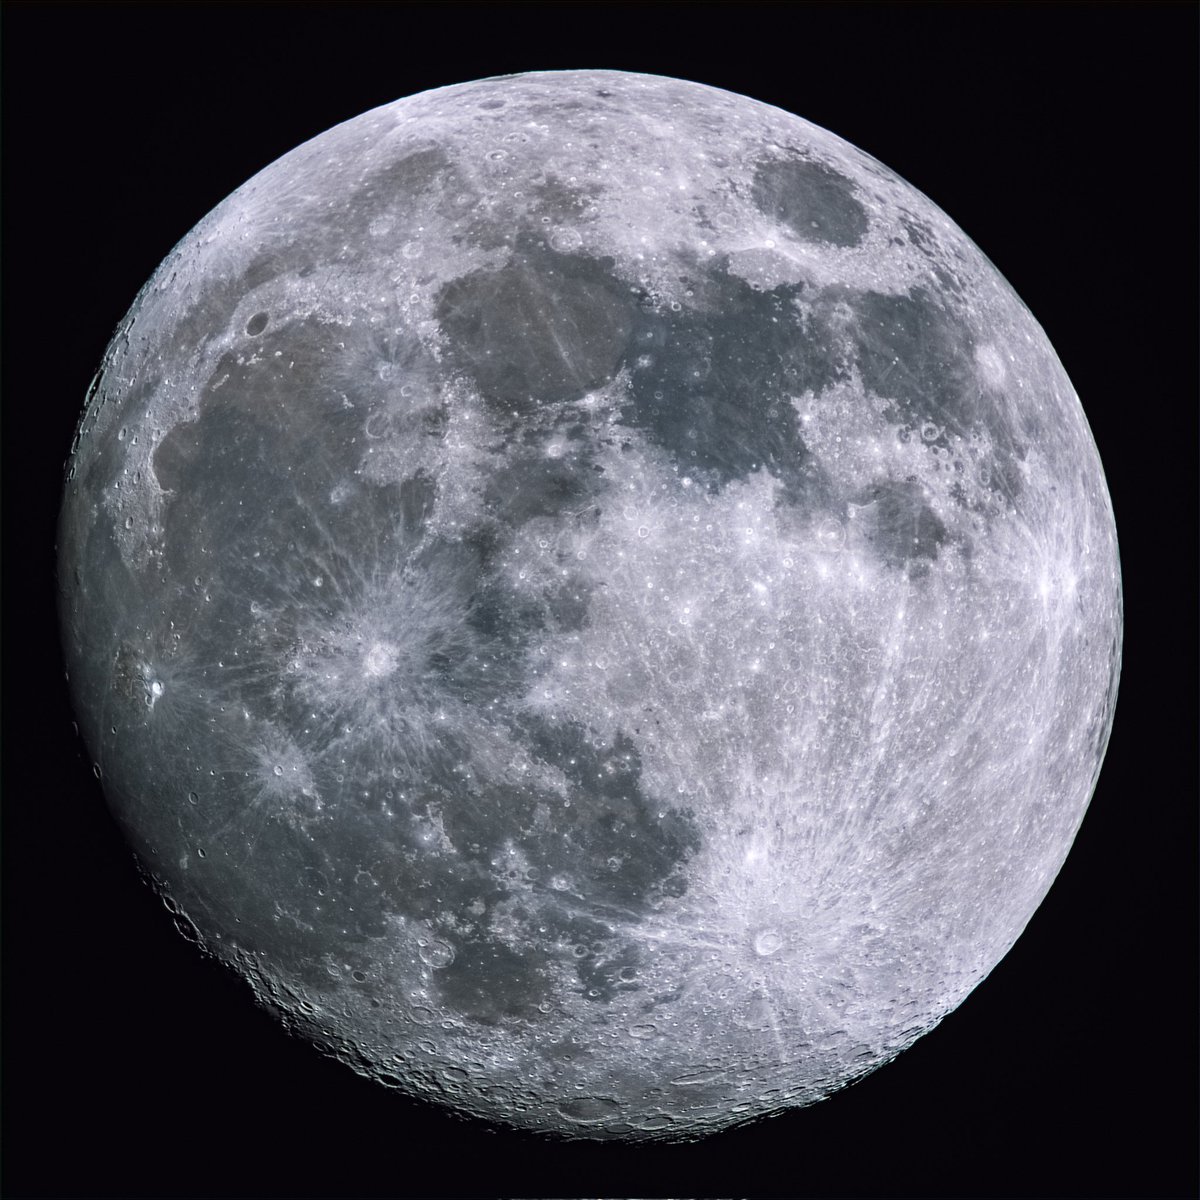 Sunday's waxing gibbous moon. 
Best 100 of 500 frames.
#MoonHour